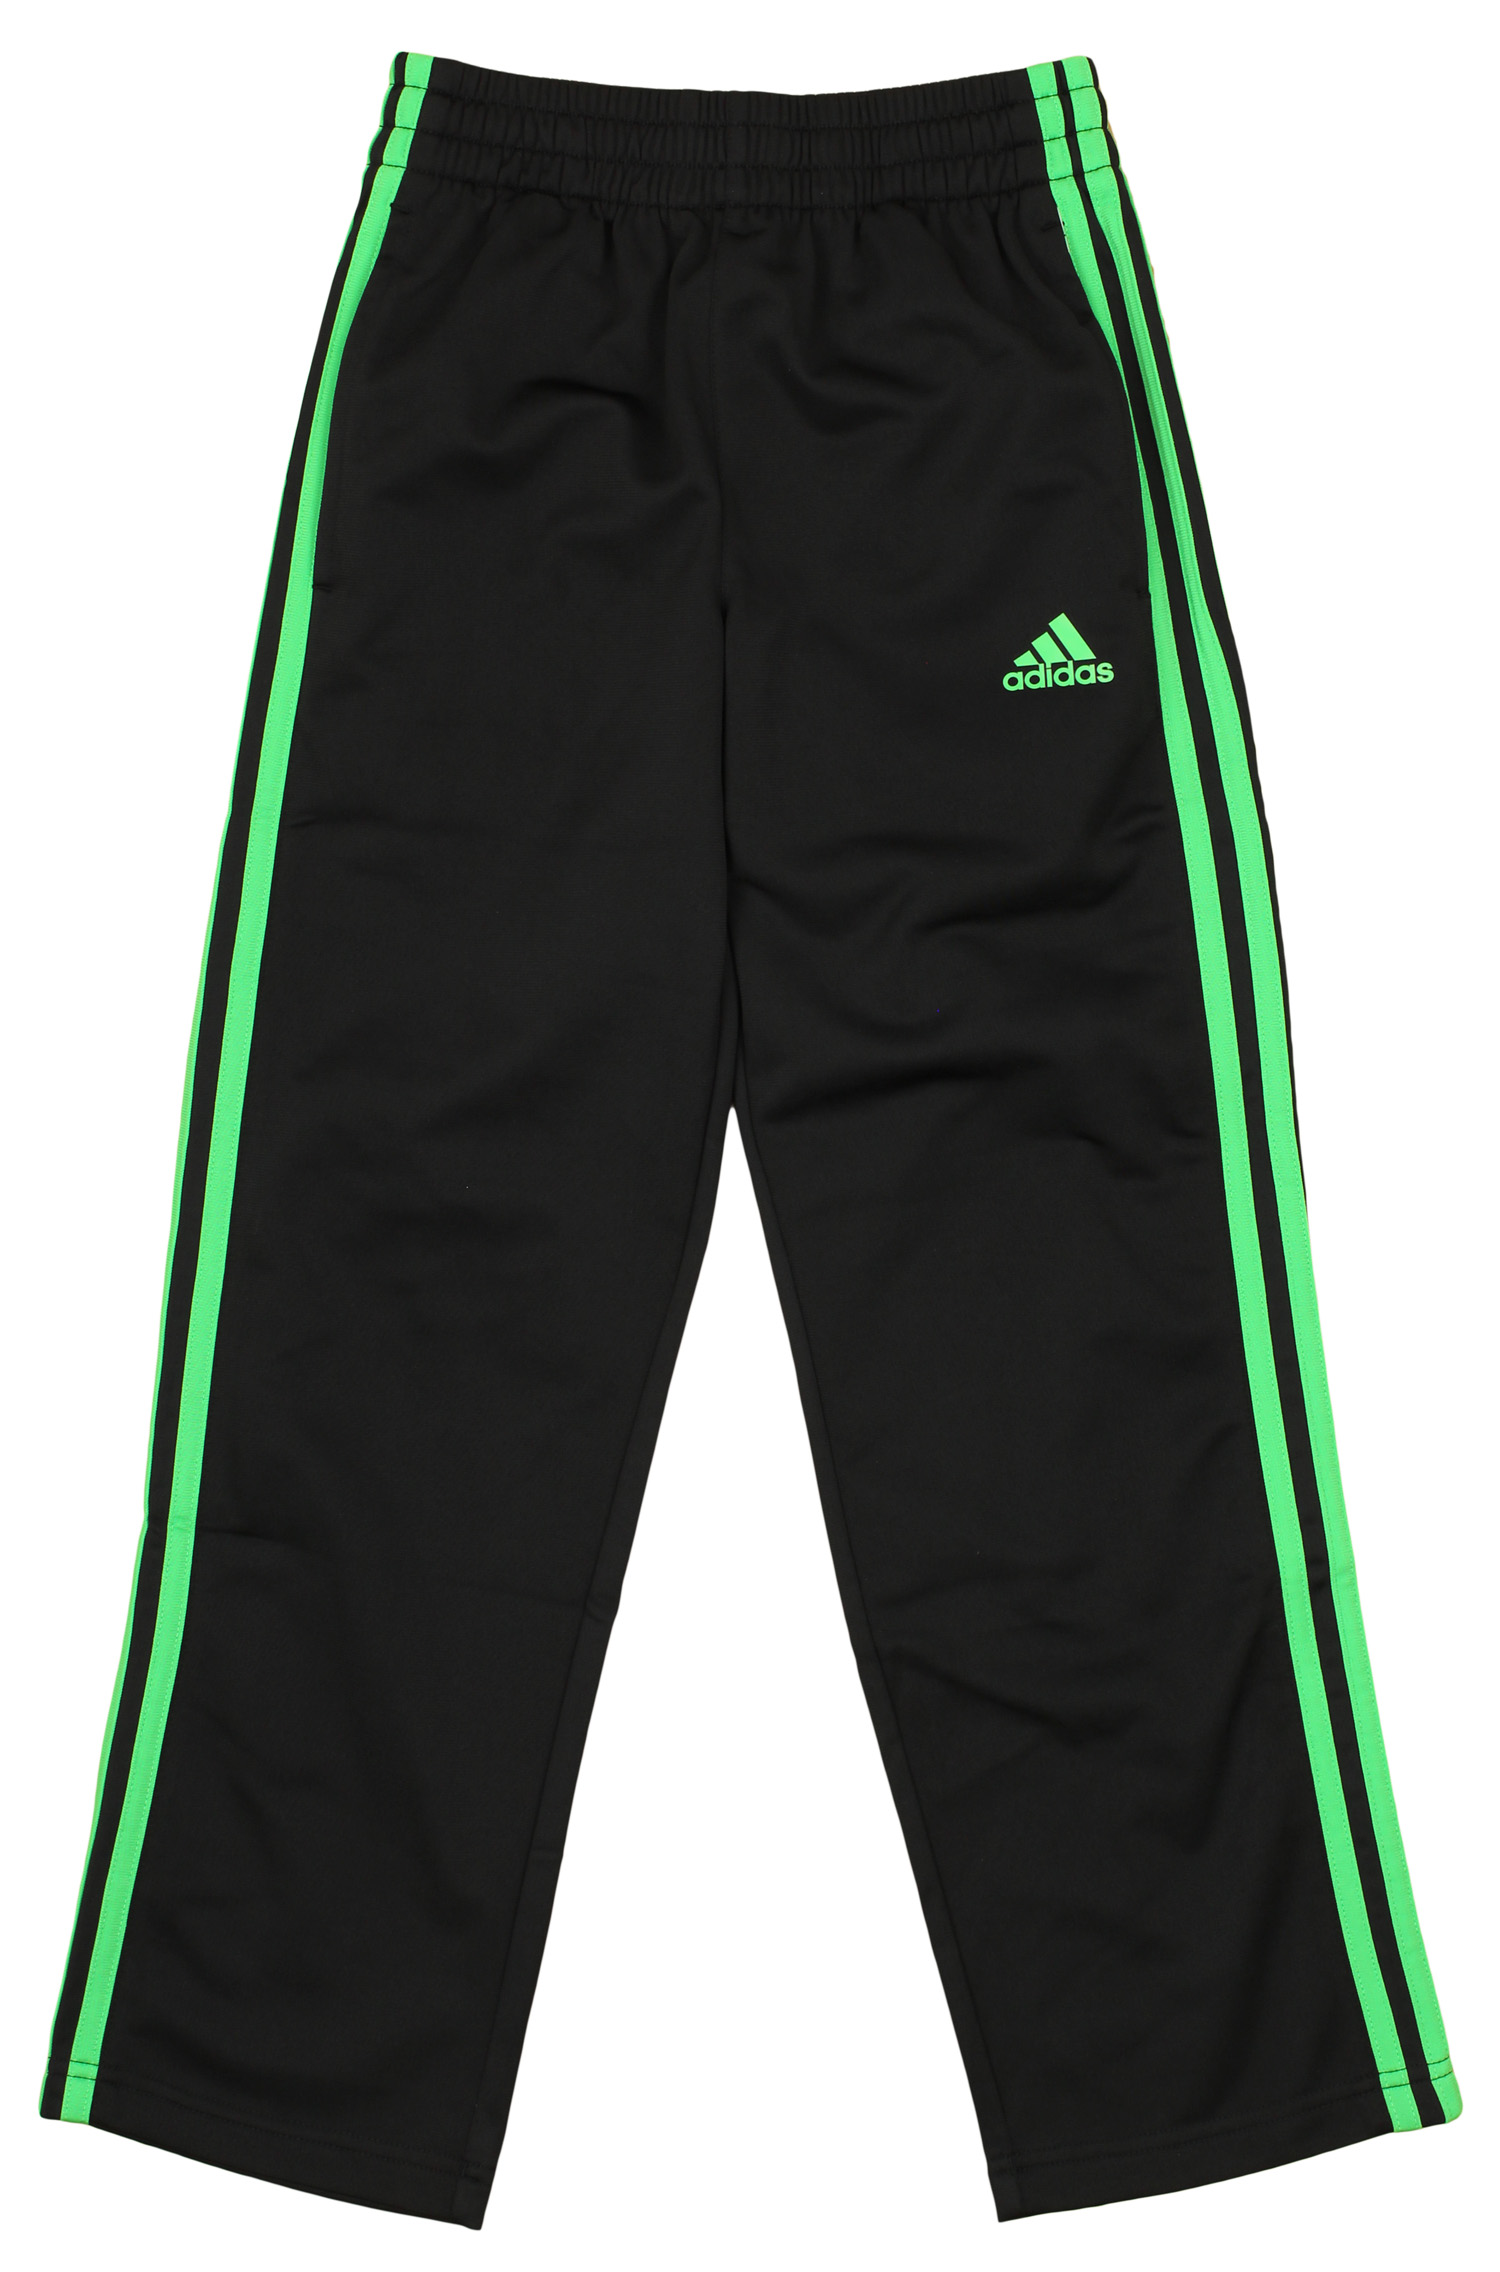 Adidas Youth Designator Track Pants, Black / Lime Green | eBay